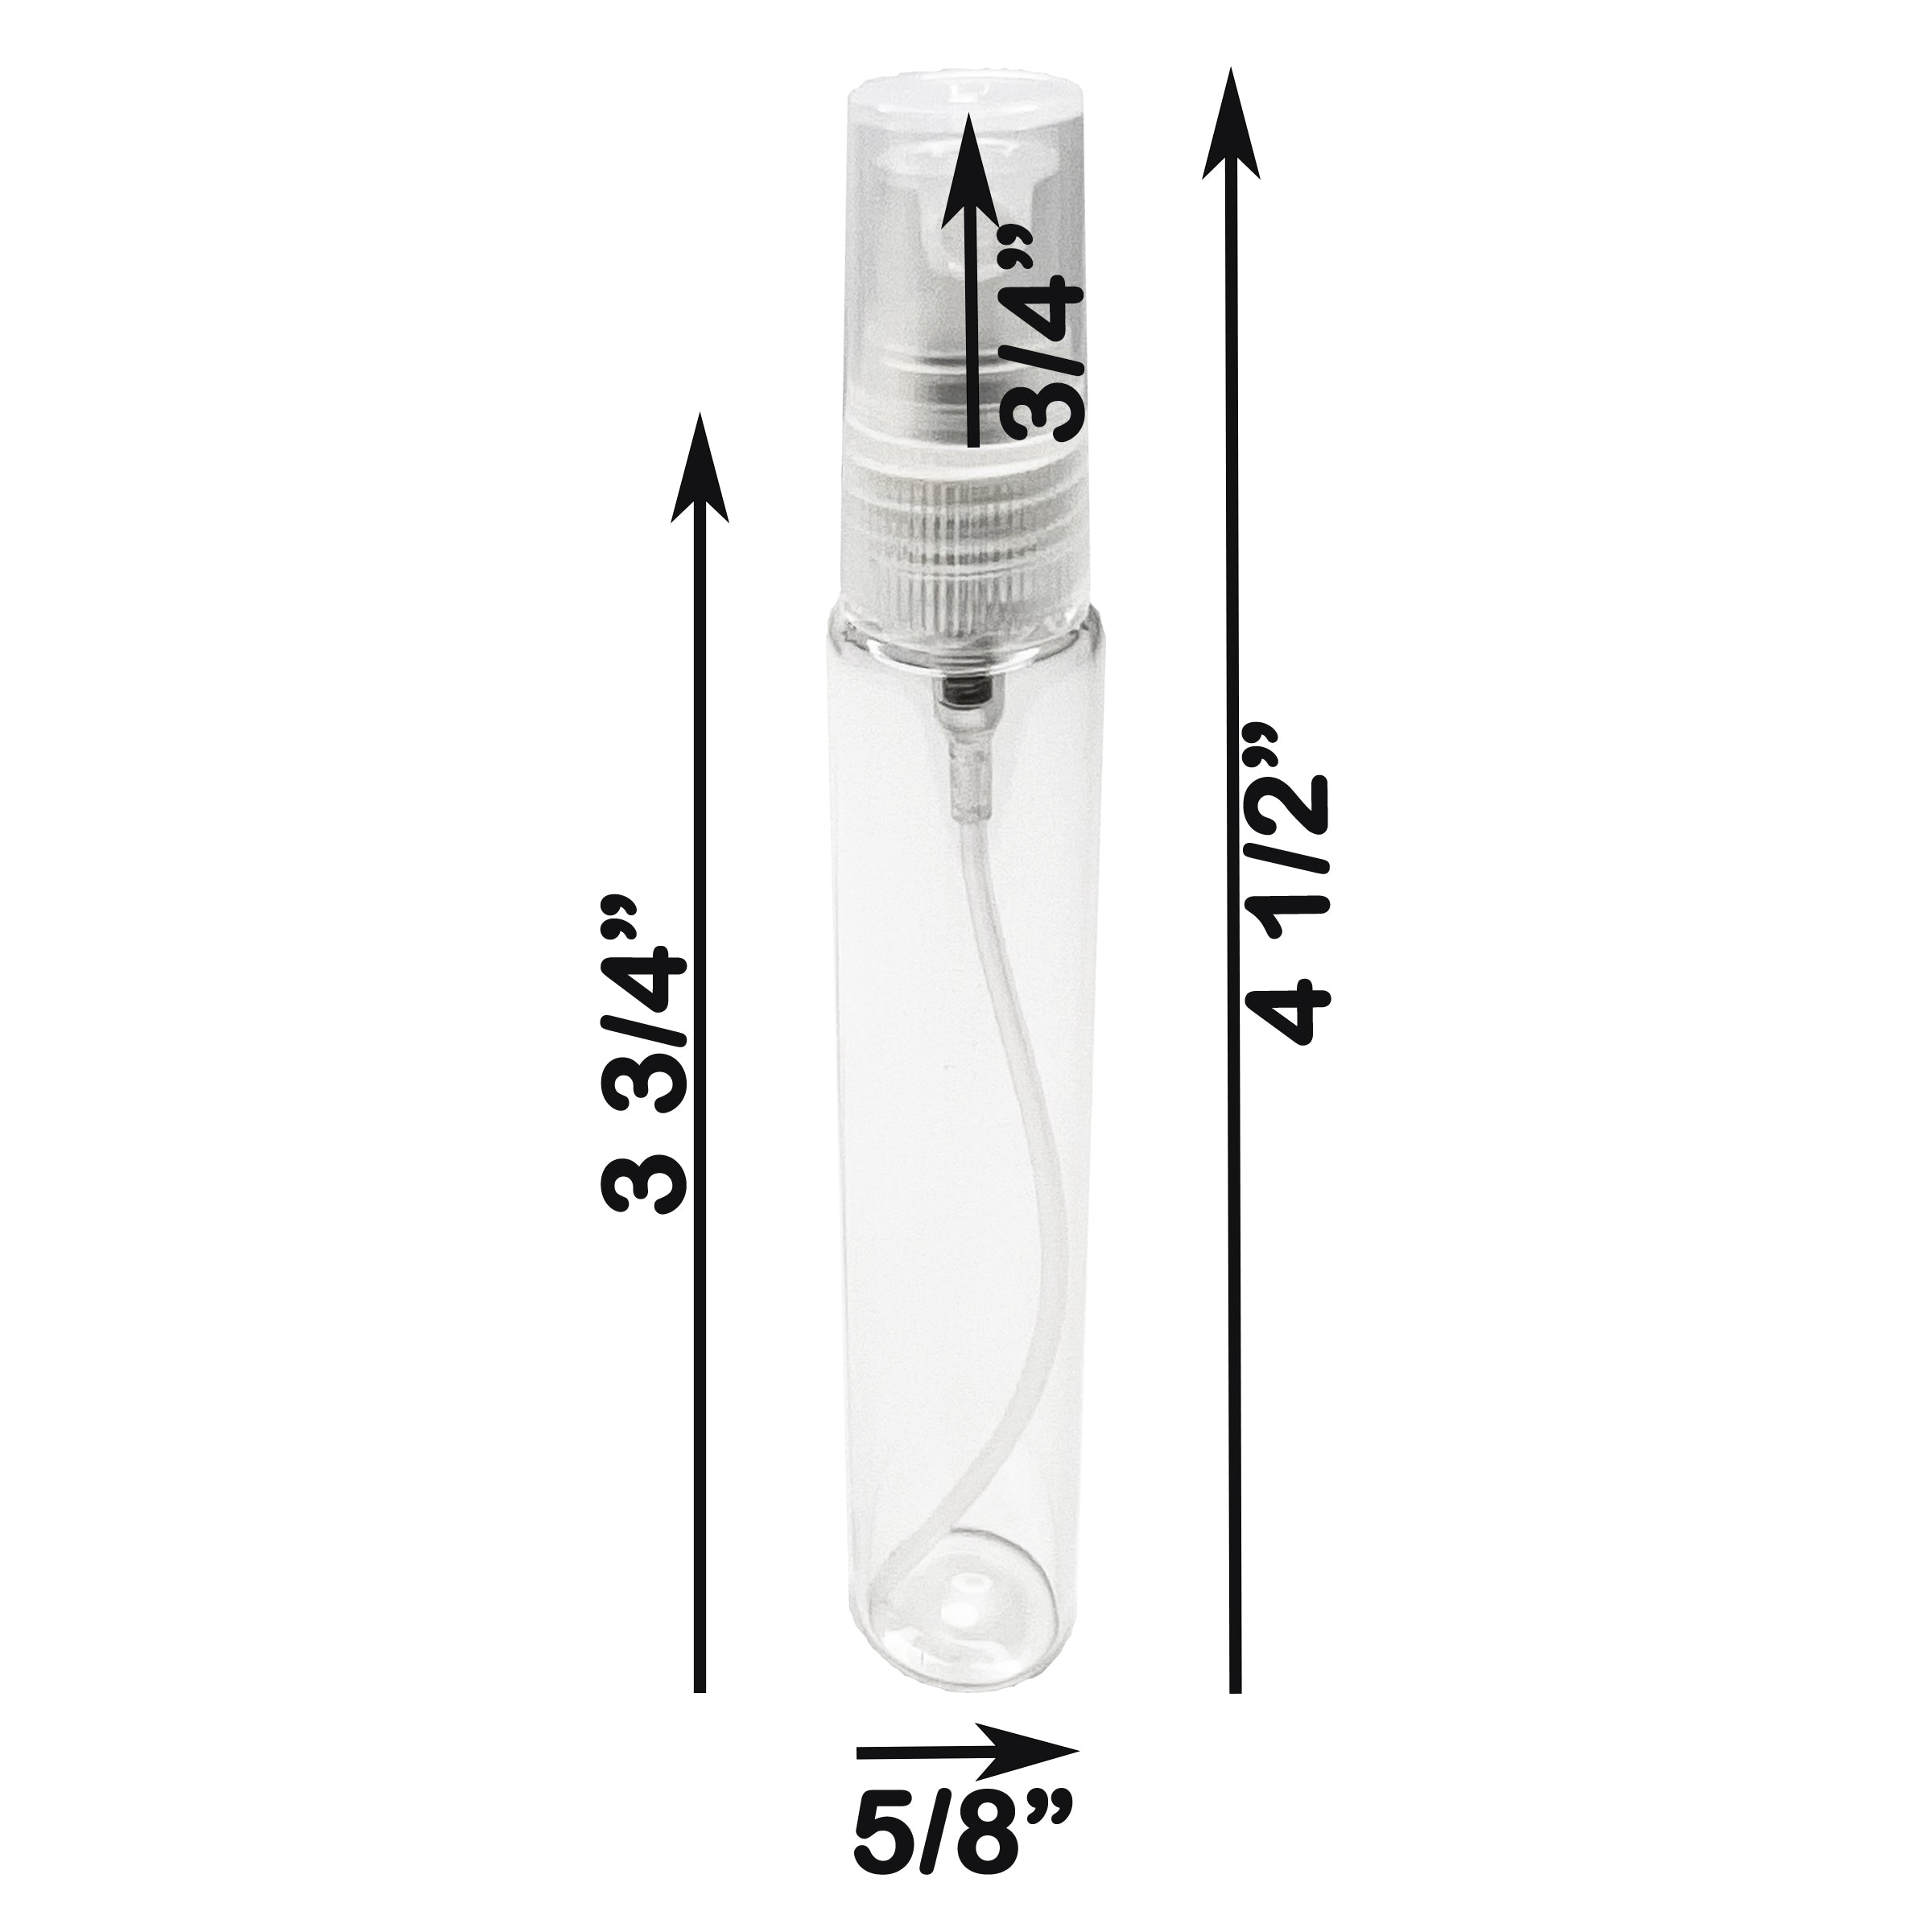 15ml 0.5oz perfume glass spray bottles clear black spray pumps